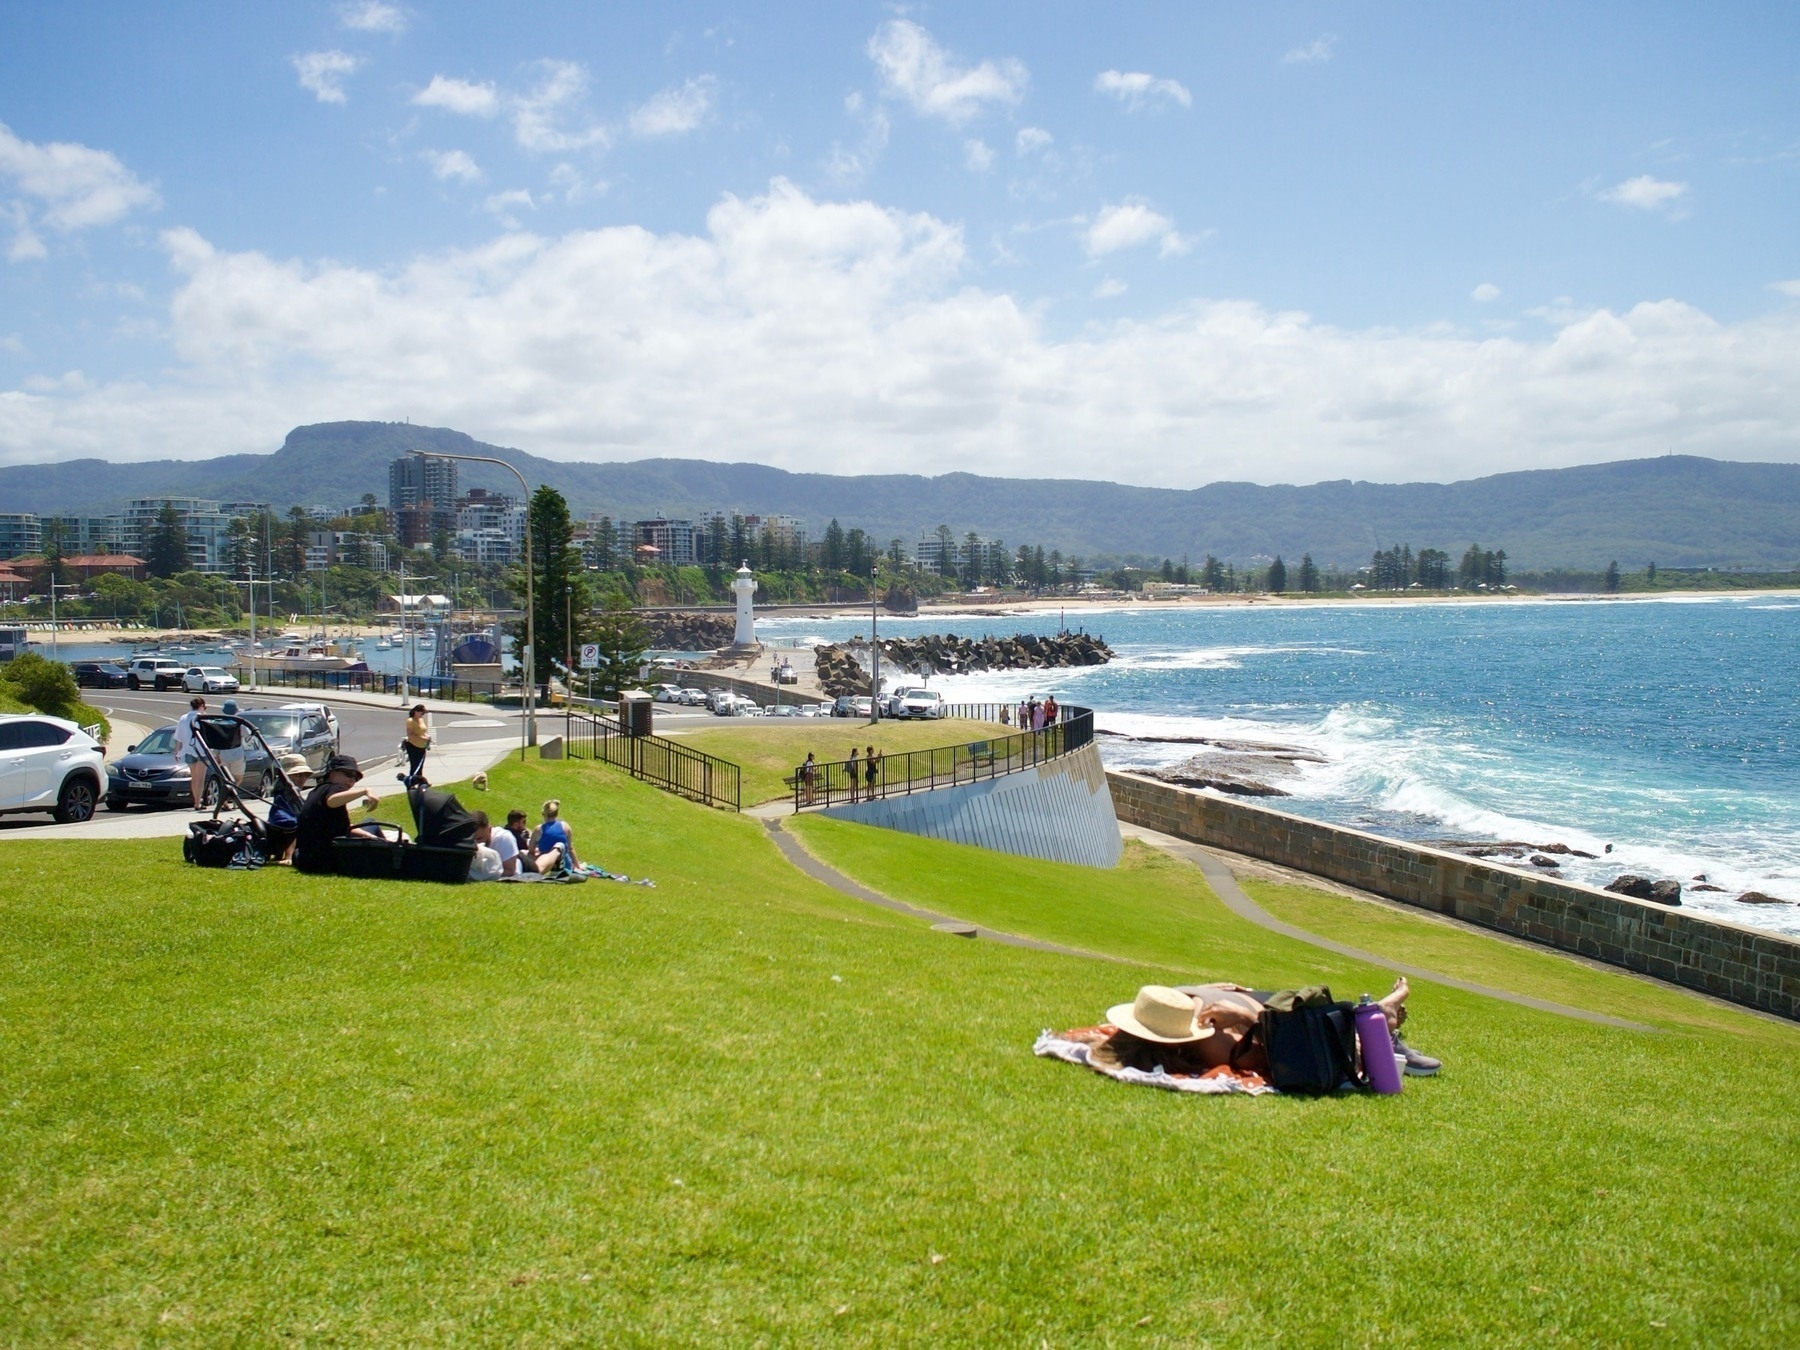 The Tasman Sea, City of Wollongong and Illawarra Escarpment on a bright day